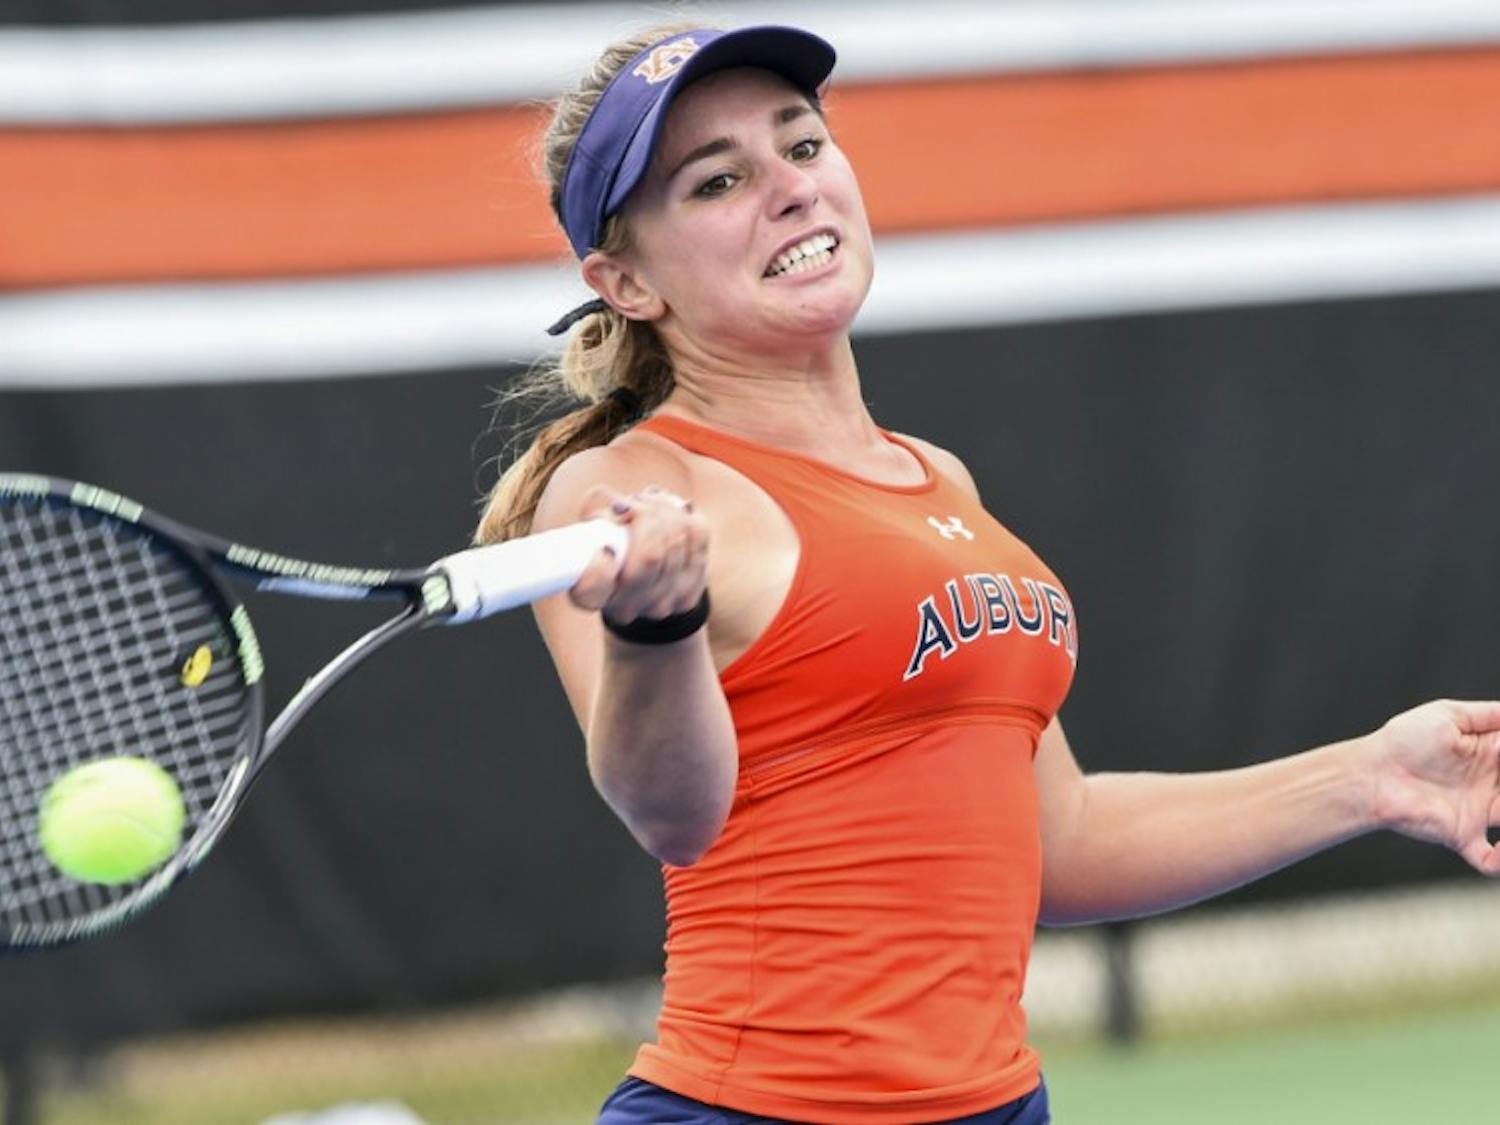 Andie Dikosavljevic. DePaul vs Auburn Women's Tennis in Auburn, Ala., on Friday, May 12, 2017.